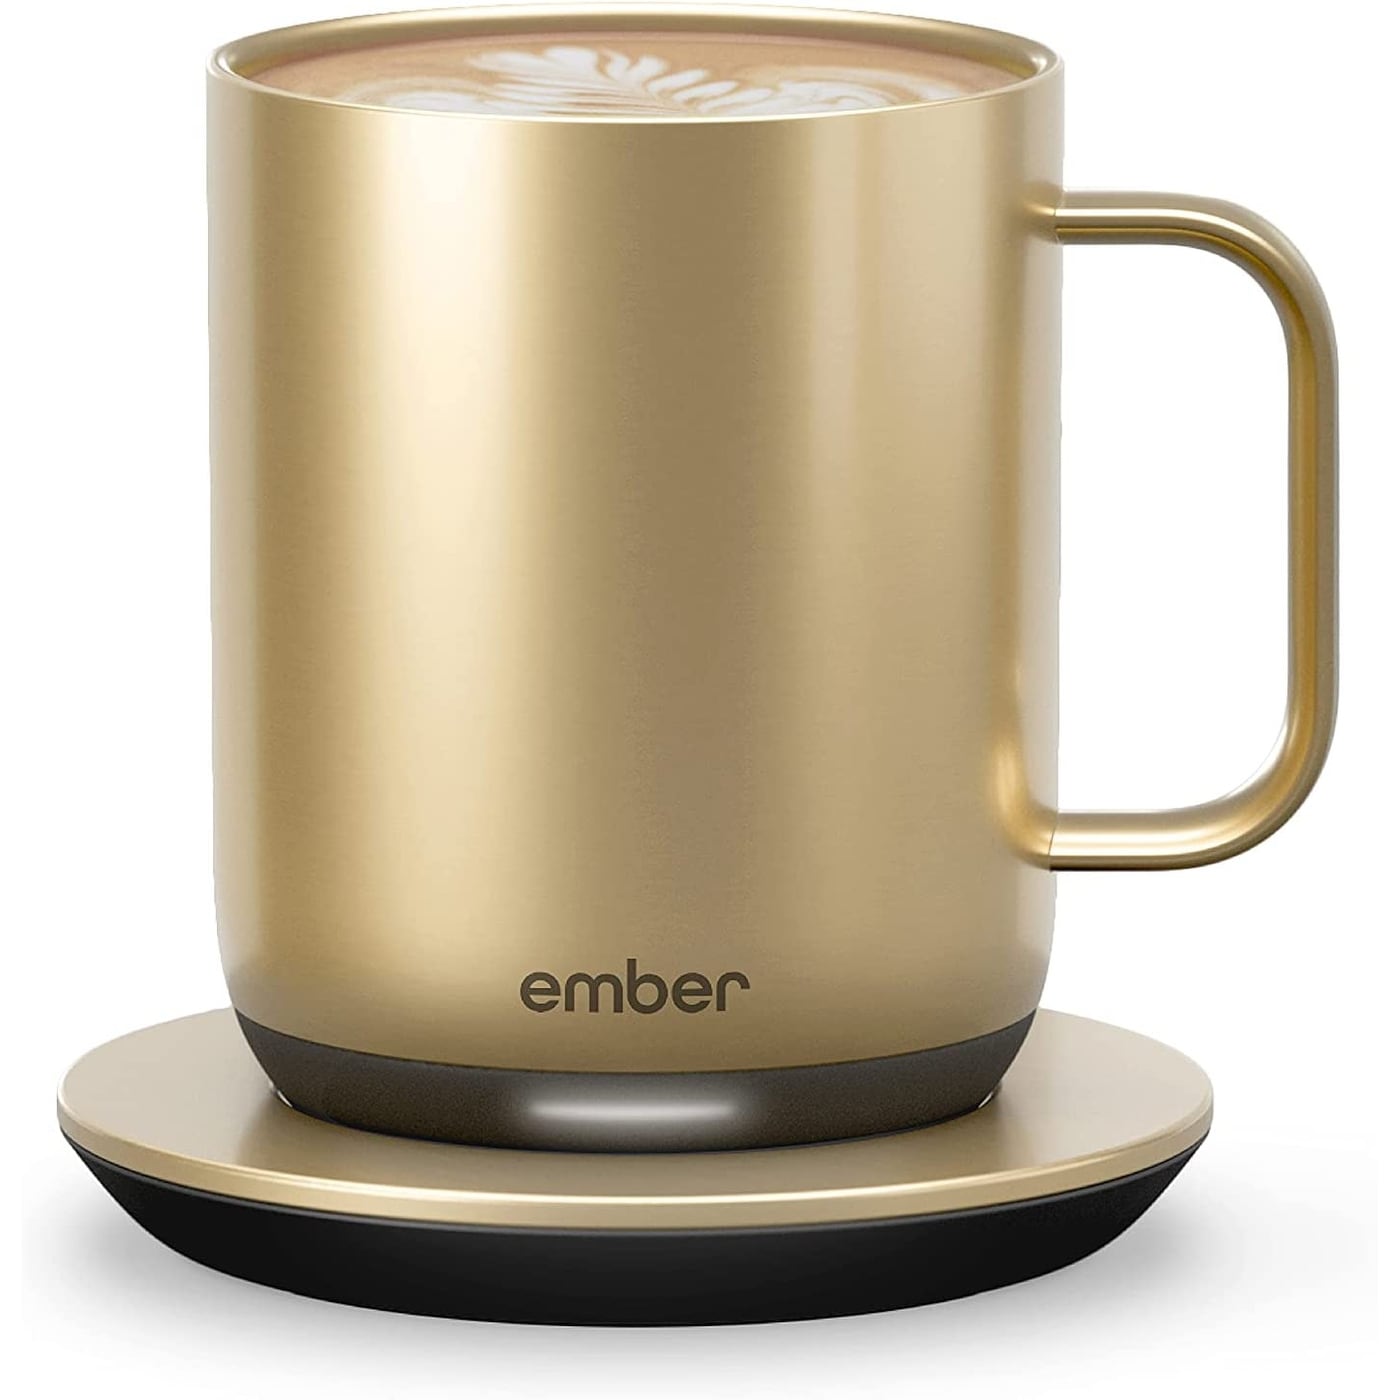 Ember Temperature Control Smart Mug 2, 10 oz, Gold, 1.5-hr Battery Life